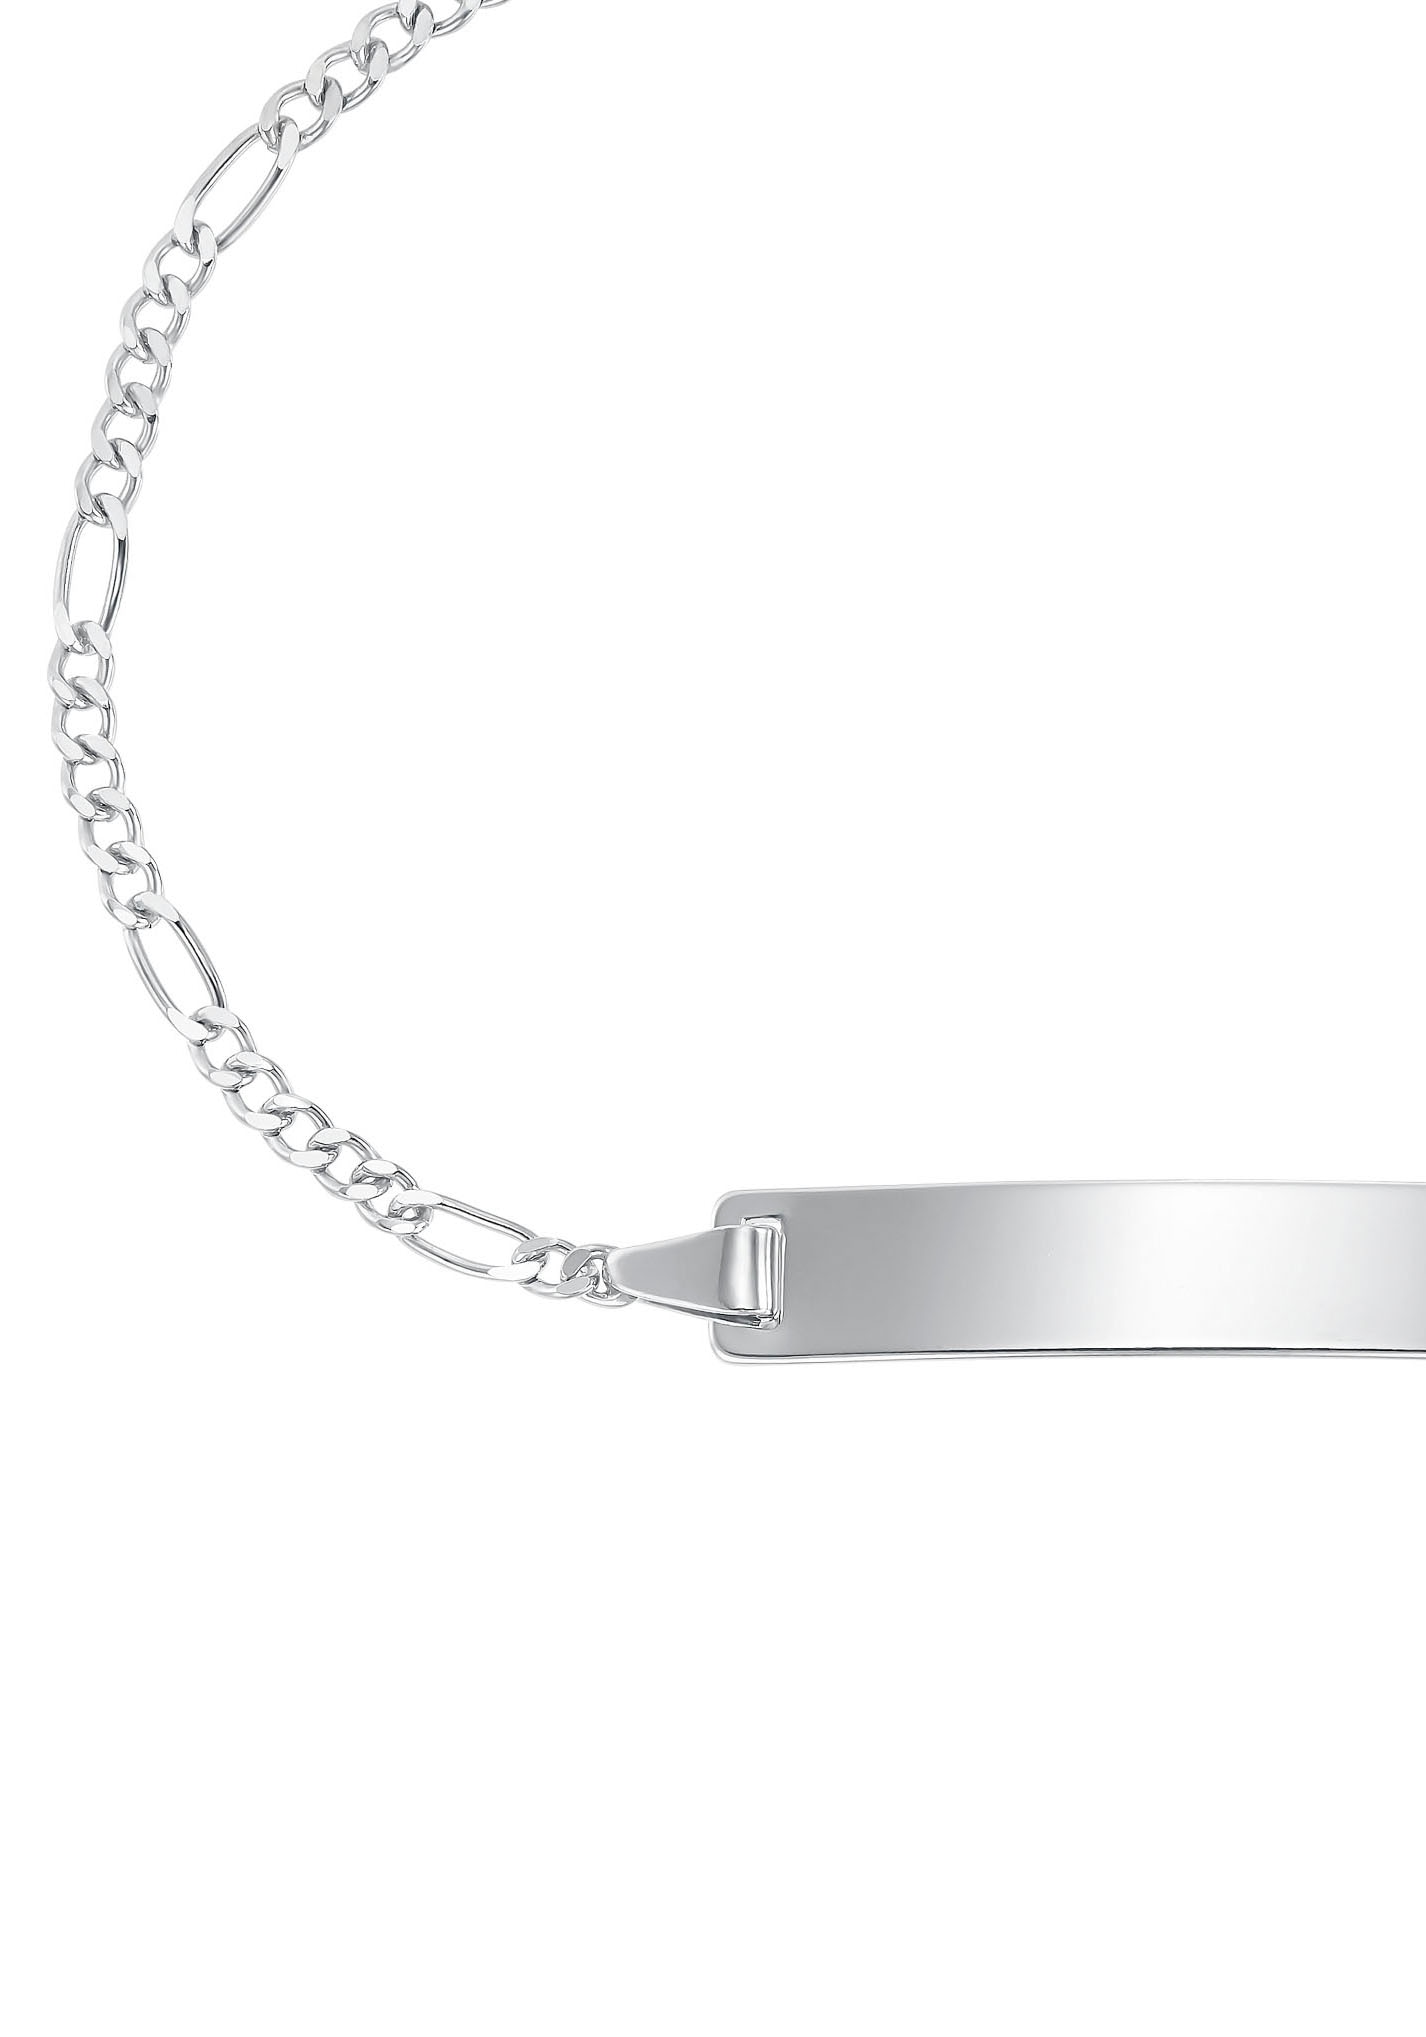 BAUR Bracelet, ID Amor Armband »Ident in Germany online kaufen Made | 2016492«,